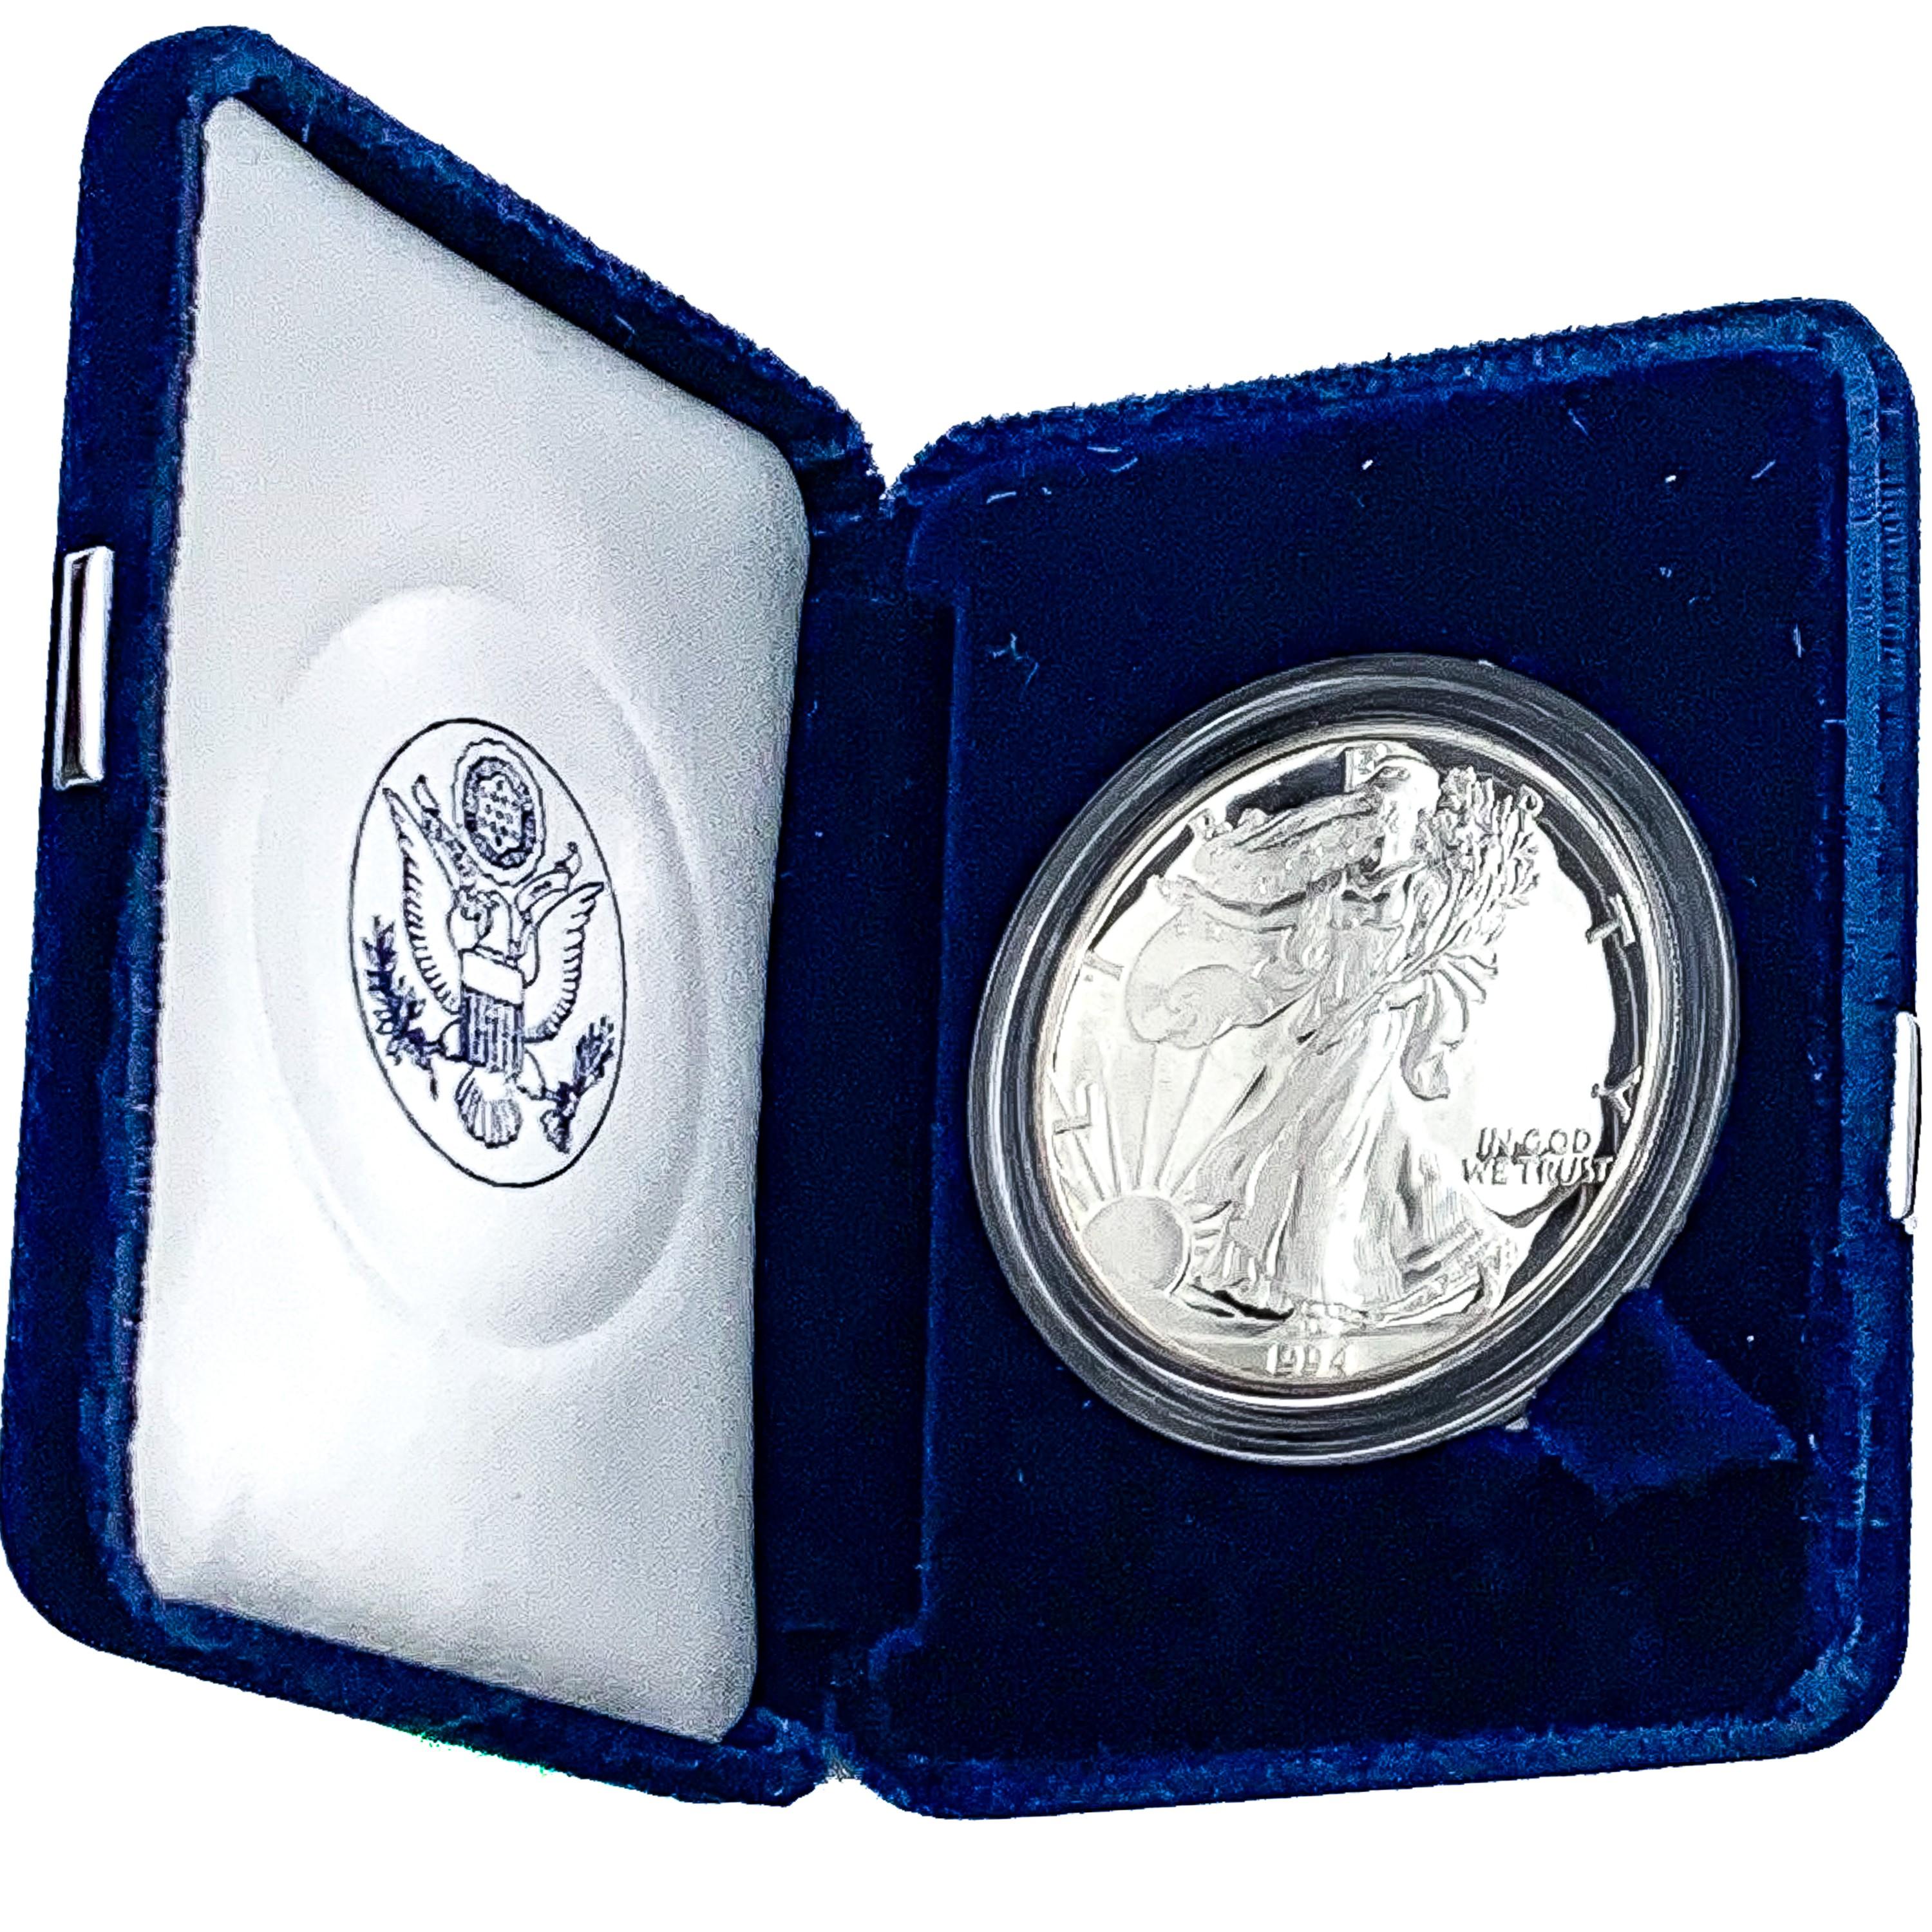 1994 US Proof Silver Eagle